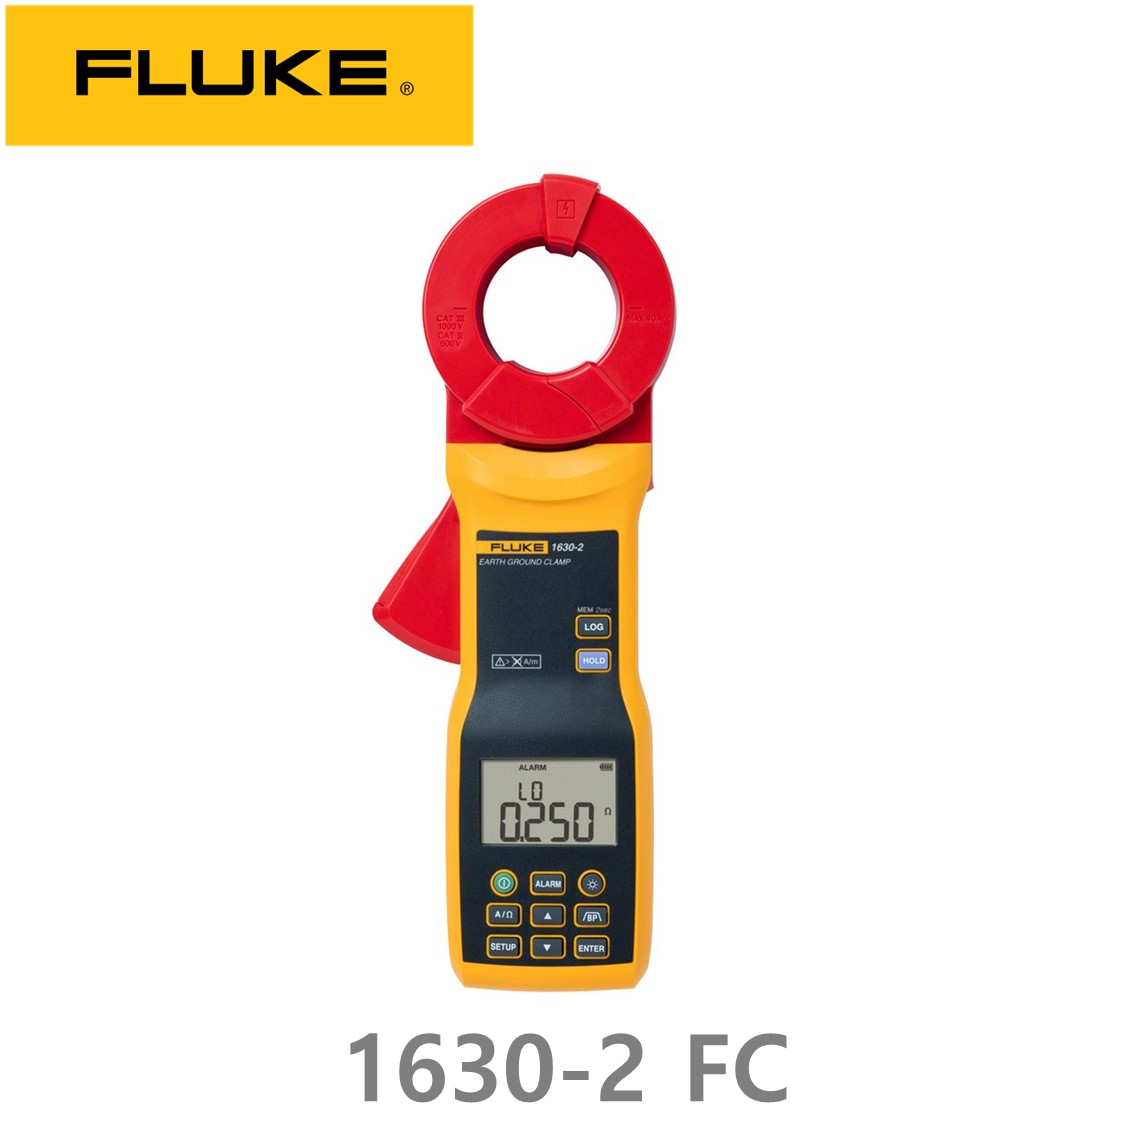 [ FLUKE 1630-2 FC ] 정품 플루크 접지저항계, 클램프미터1630-2